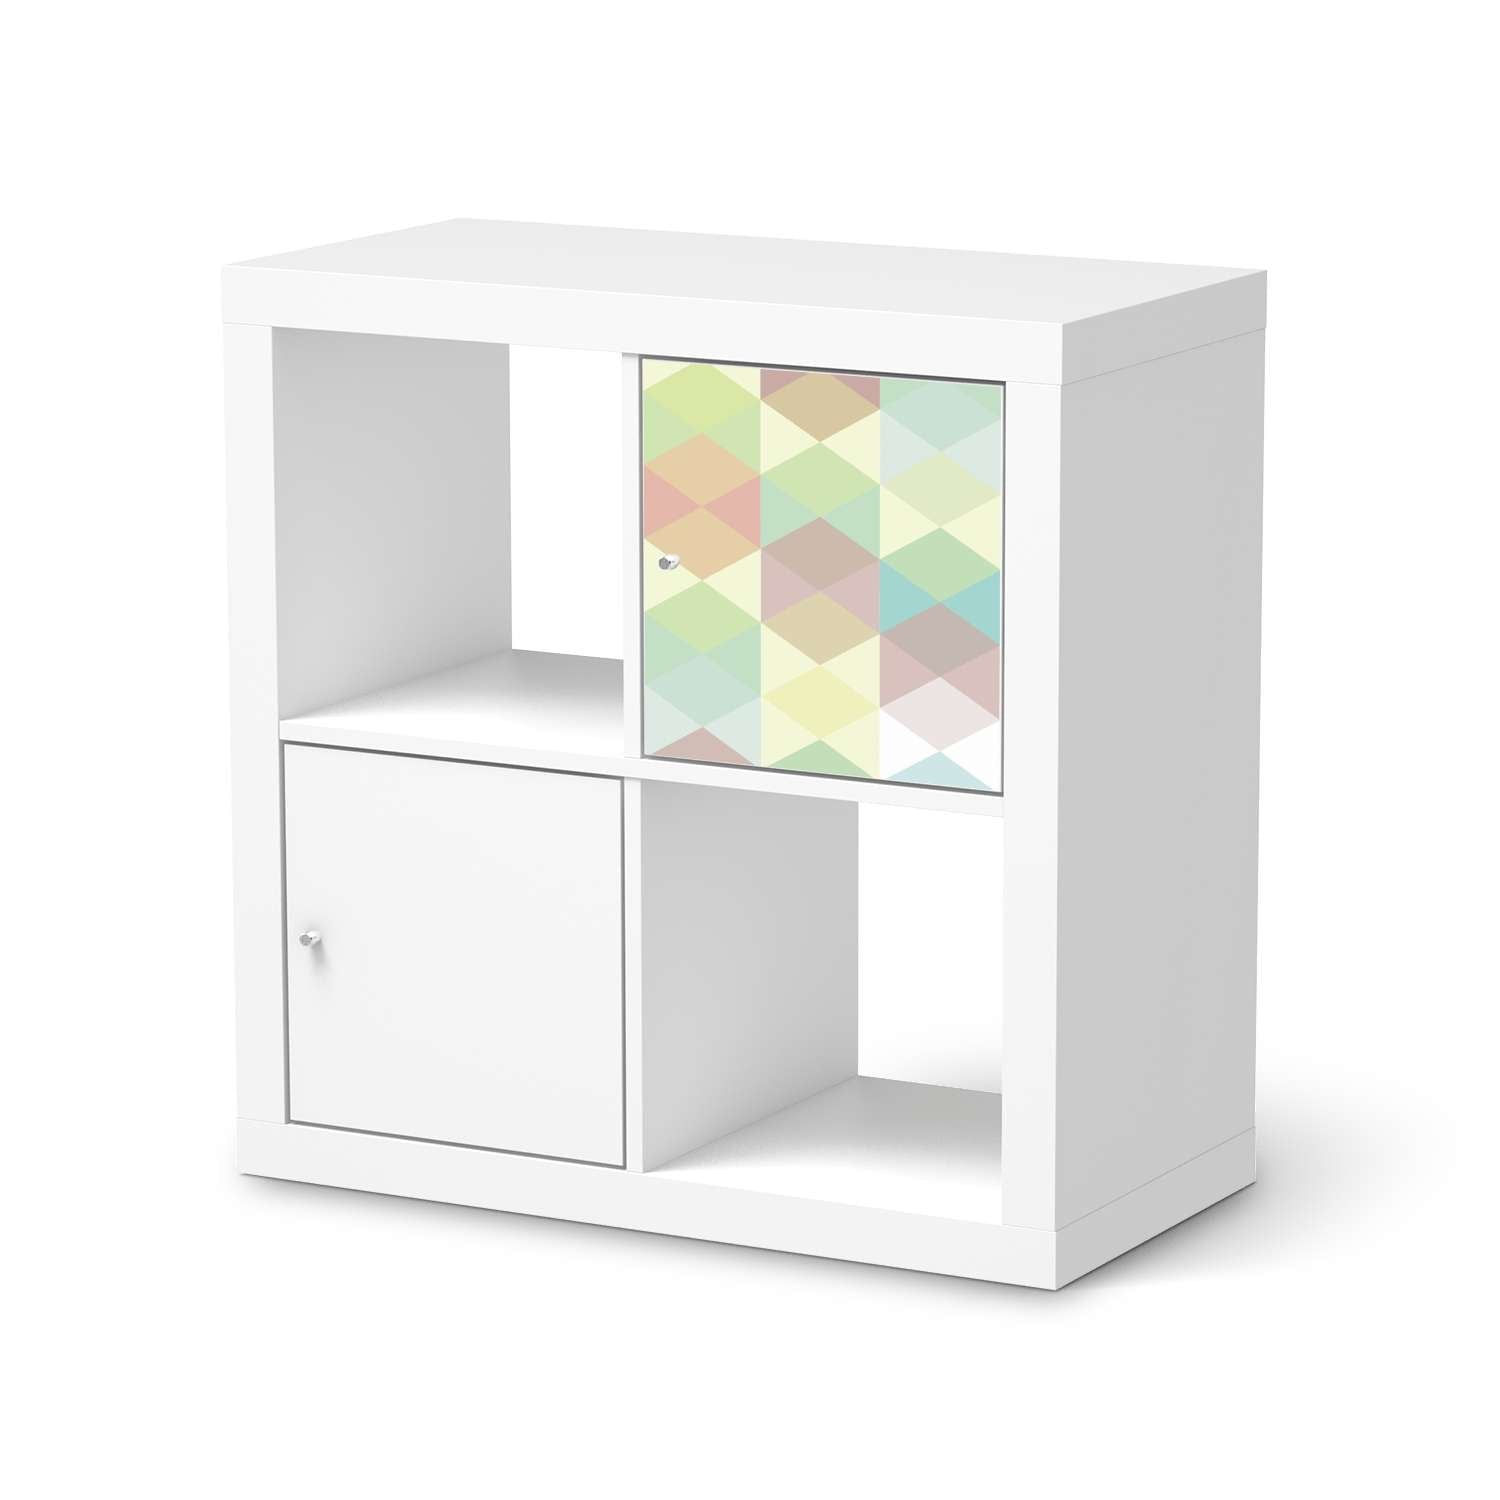 Selbstklebende Folie IKEA Kallax Regal 1 T?re - Design: Melitta Pastell Geometrie von creatisto